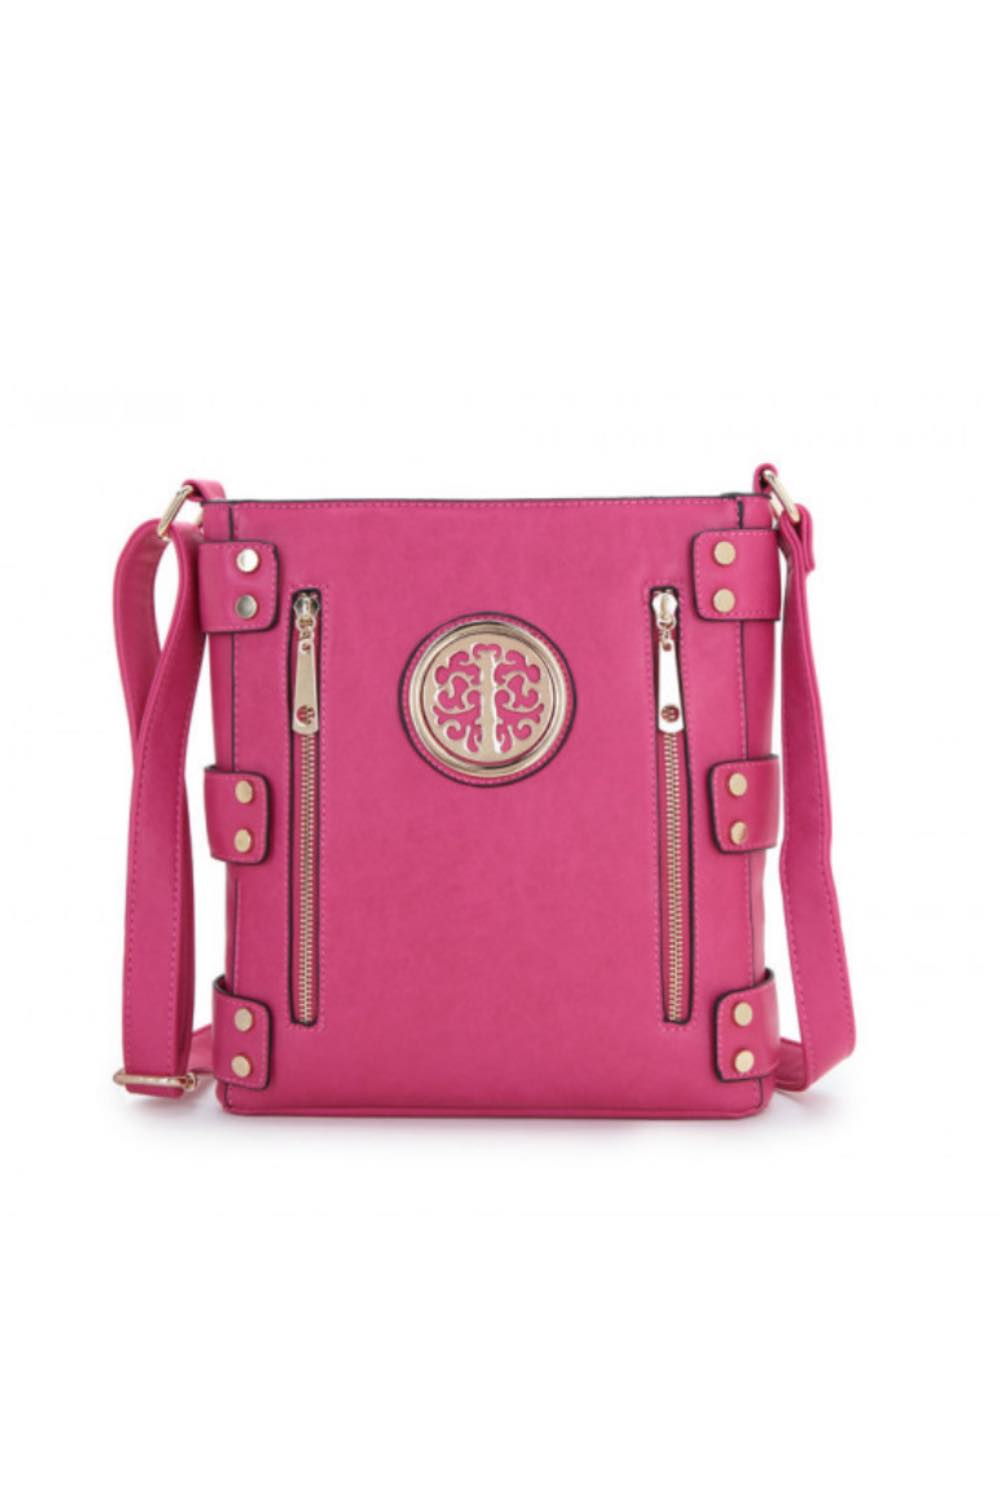 Fuchsia-Pink-Cross-Body-Bag-with-Emblem-djv-boutique